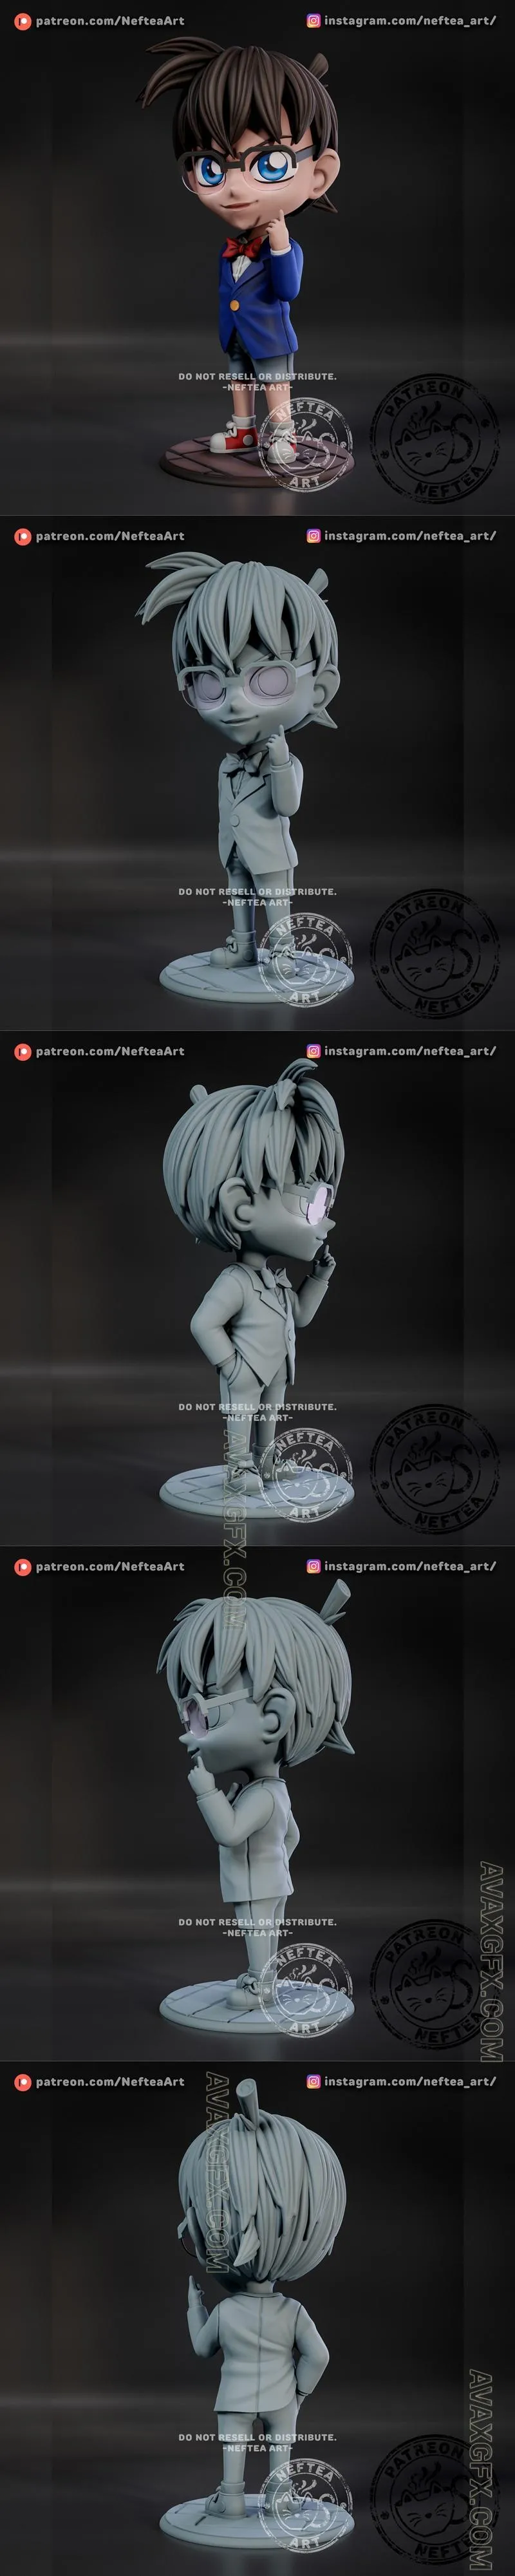 Chibi (Conan) - STL 3D Model